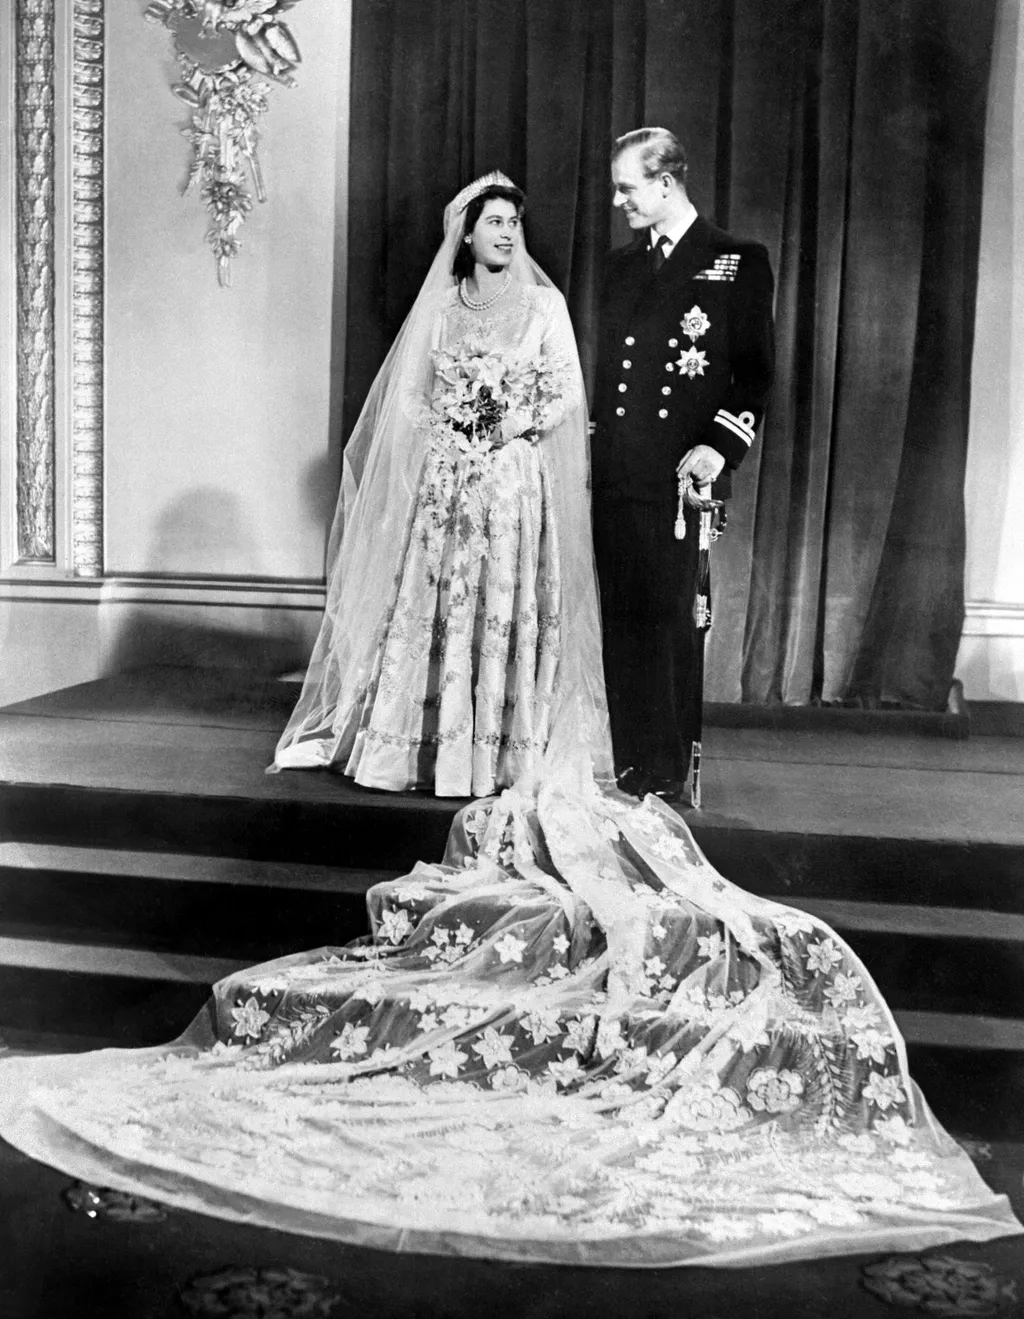 Vertical PRINCESS PRINCE COUPLE ROYAL FAMILY HUSBAND WEDDING SMILING THE EYES WEDDING DRESSS FLOWER BLACK AND WHITE PICTURE
Királyi esküvők 7. 